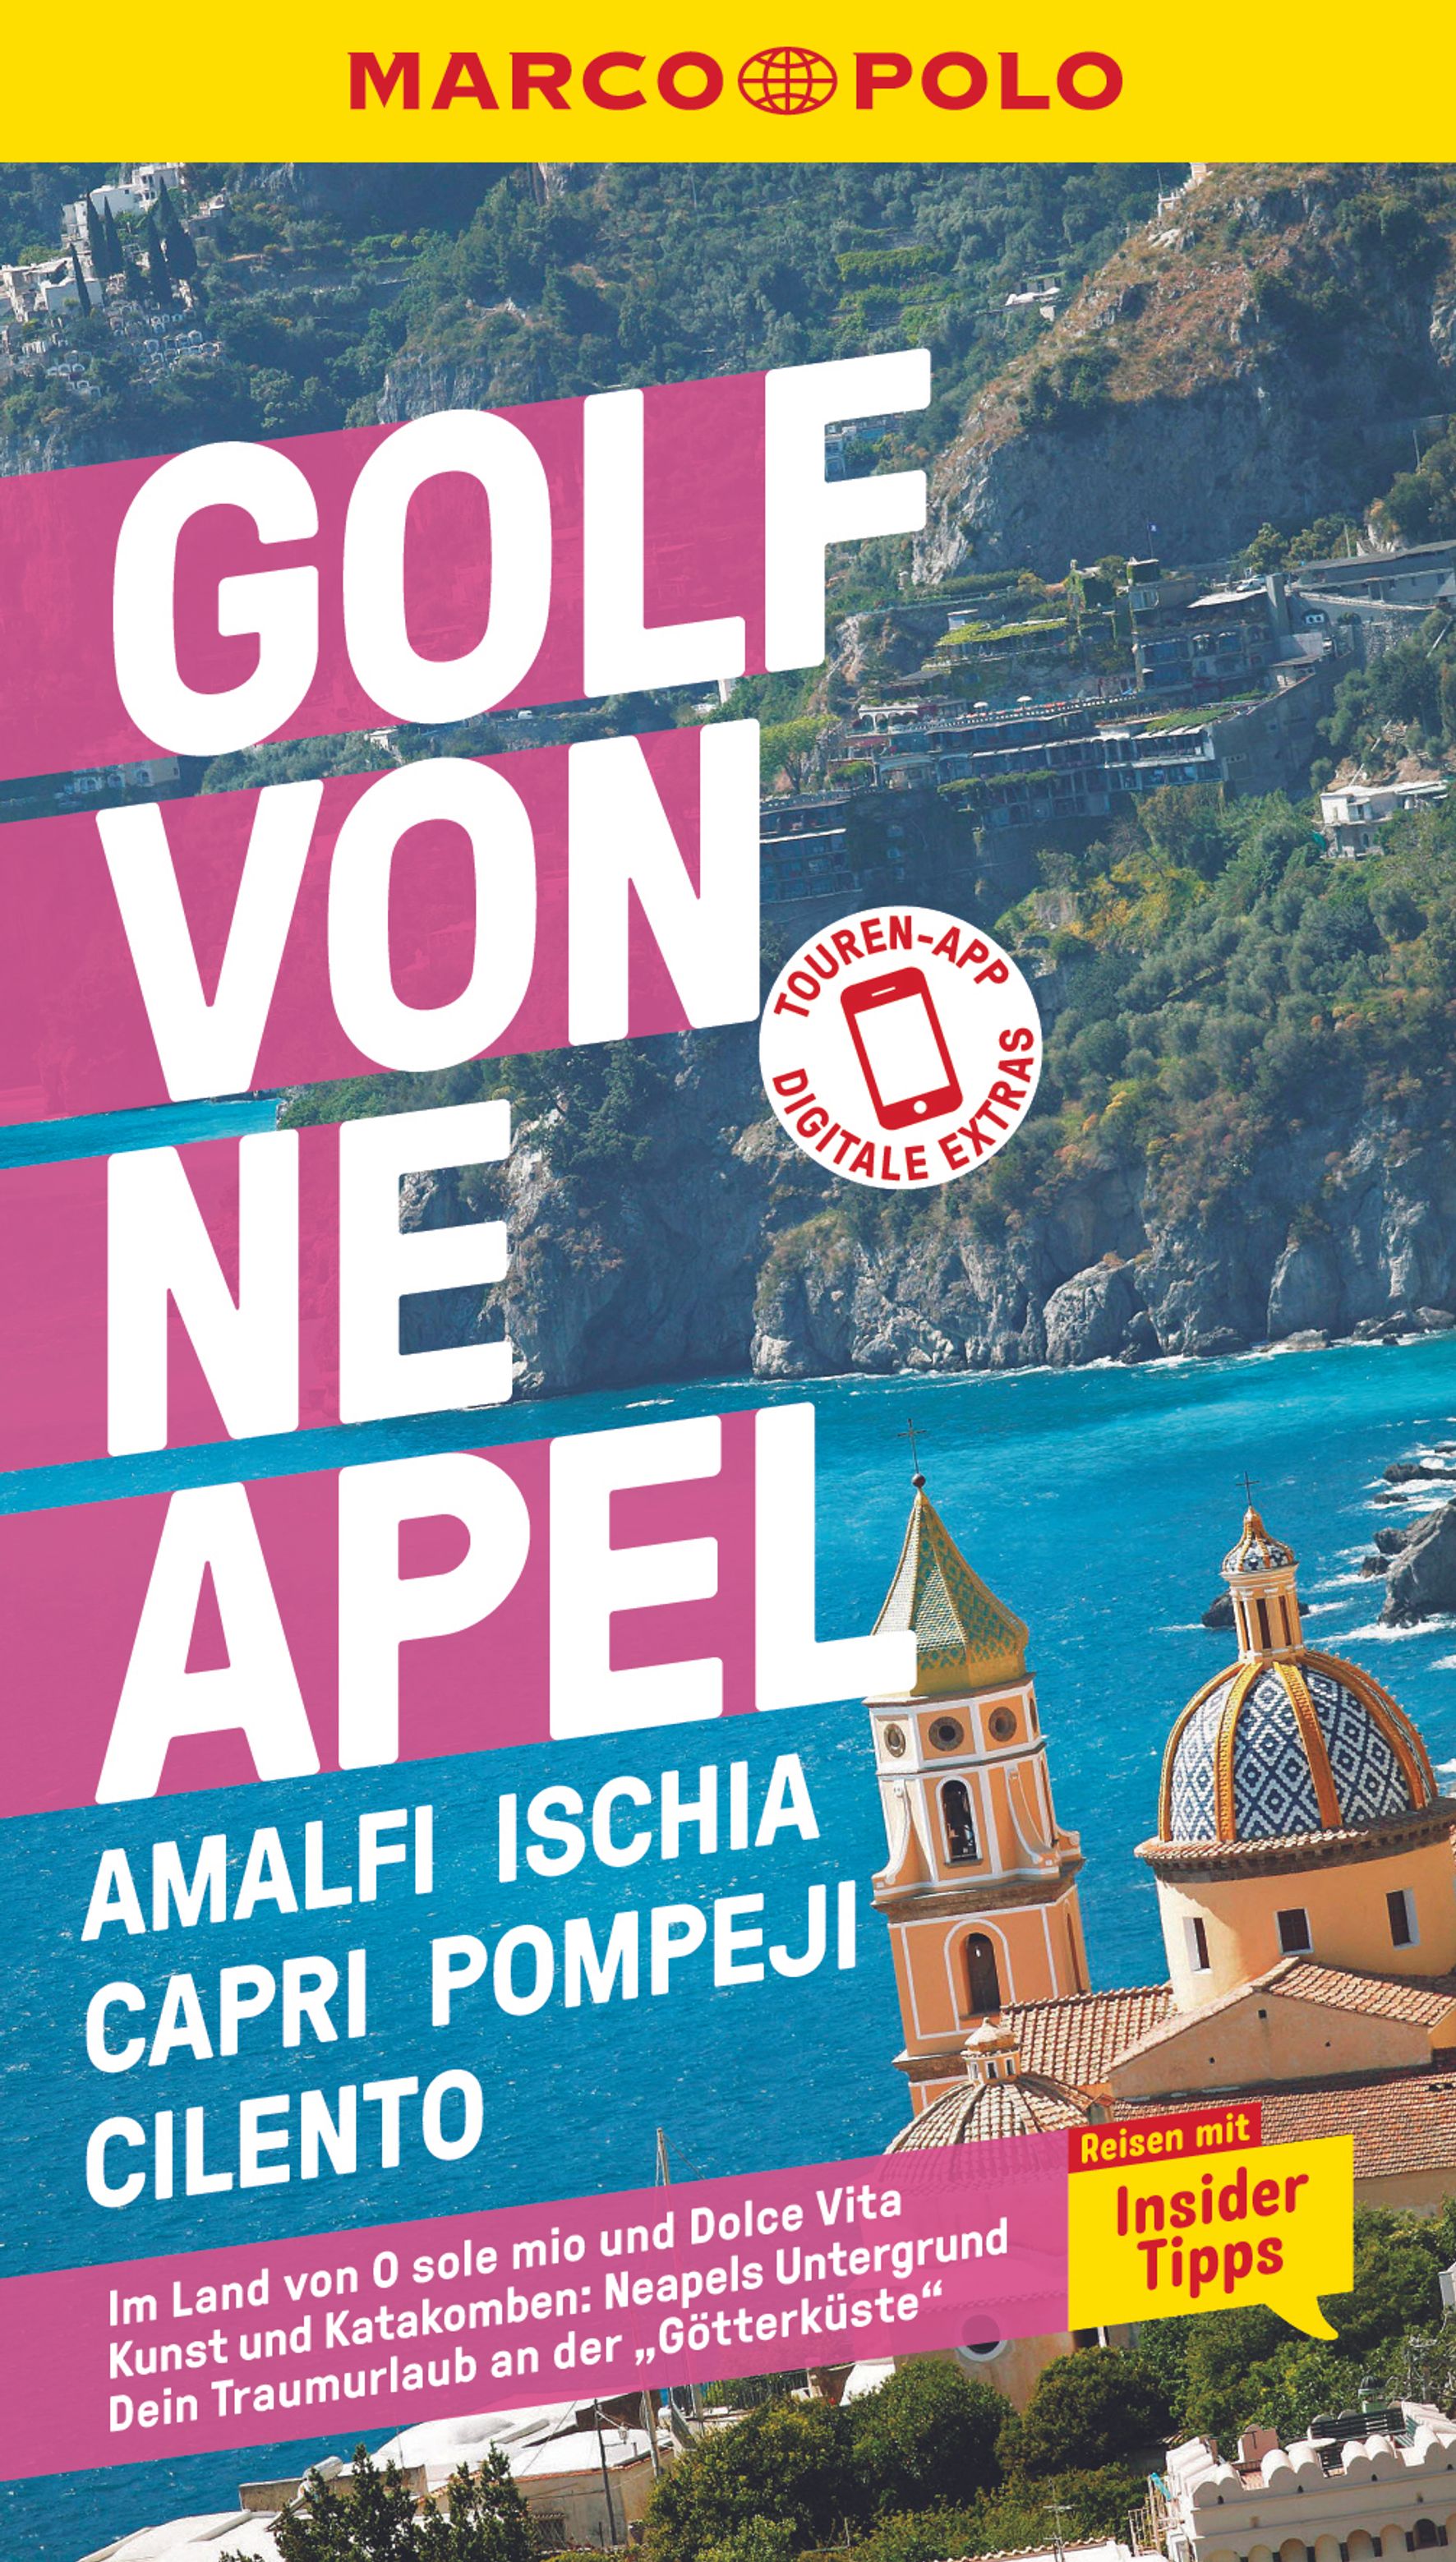 MAIRDUMONT Golf von Neapel, Amalfi, Ischia, Capri, Pompeji, Cilento